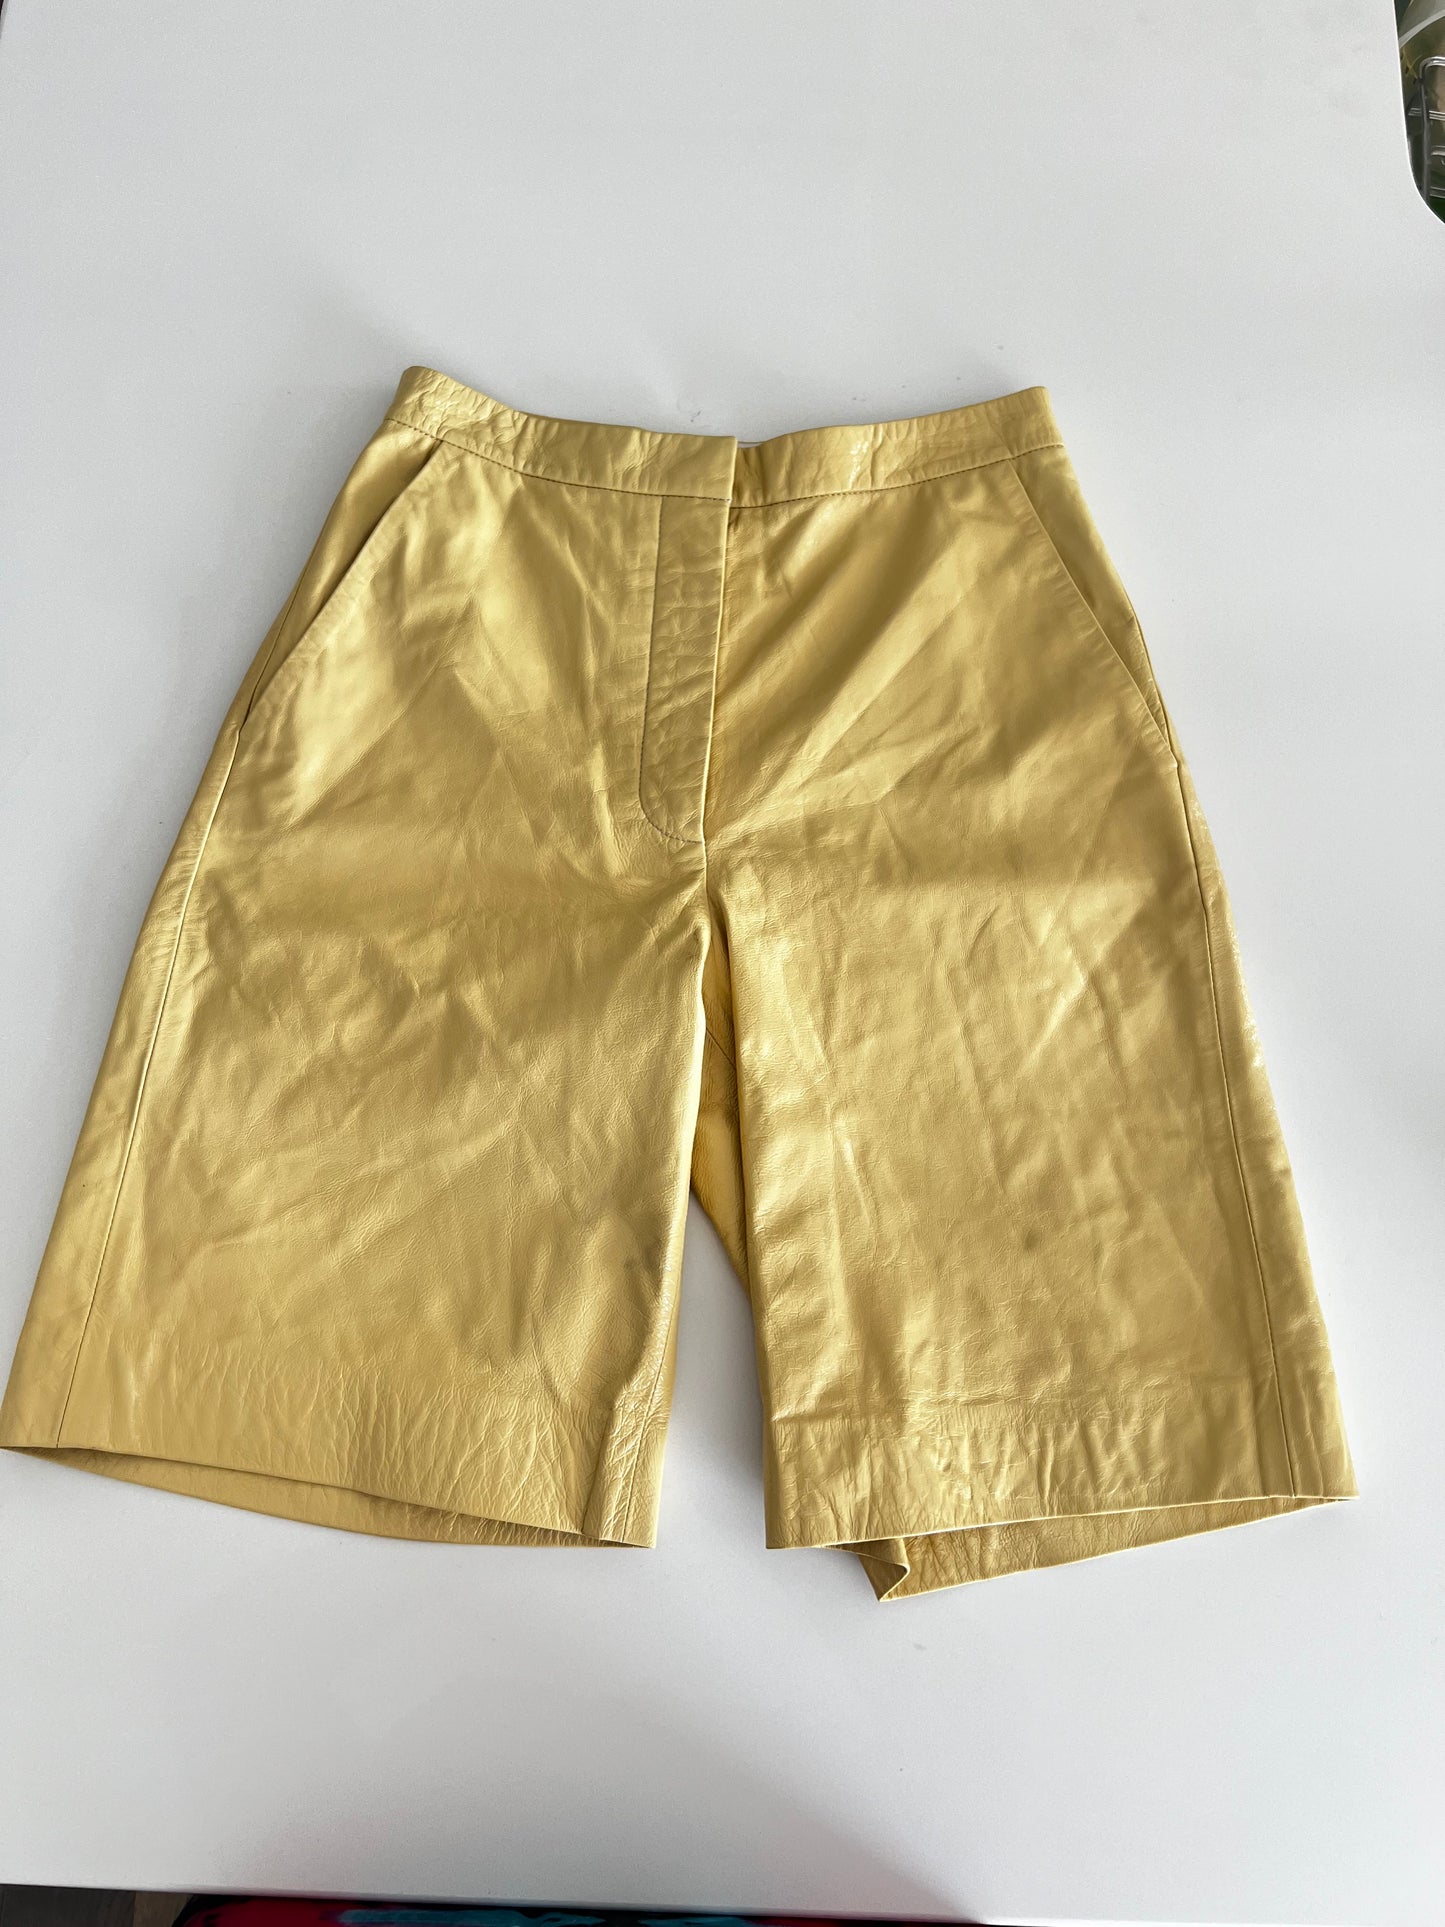 Remain Christensen Birger Maisy Yellow Straw Leather Shorts Size 28/ US6